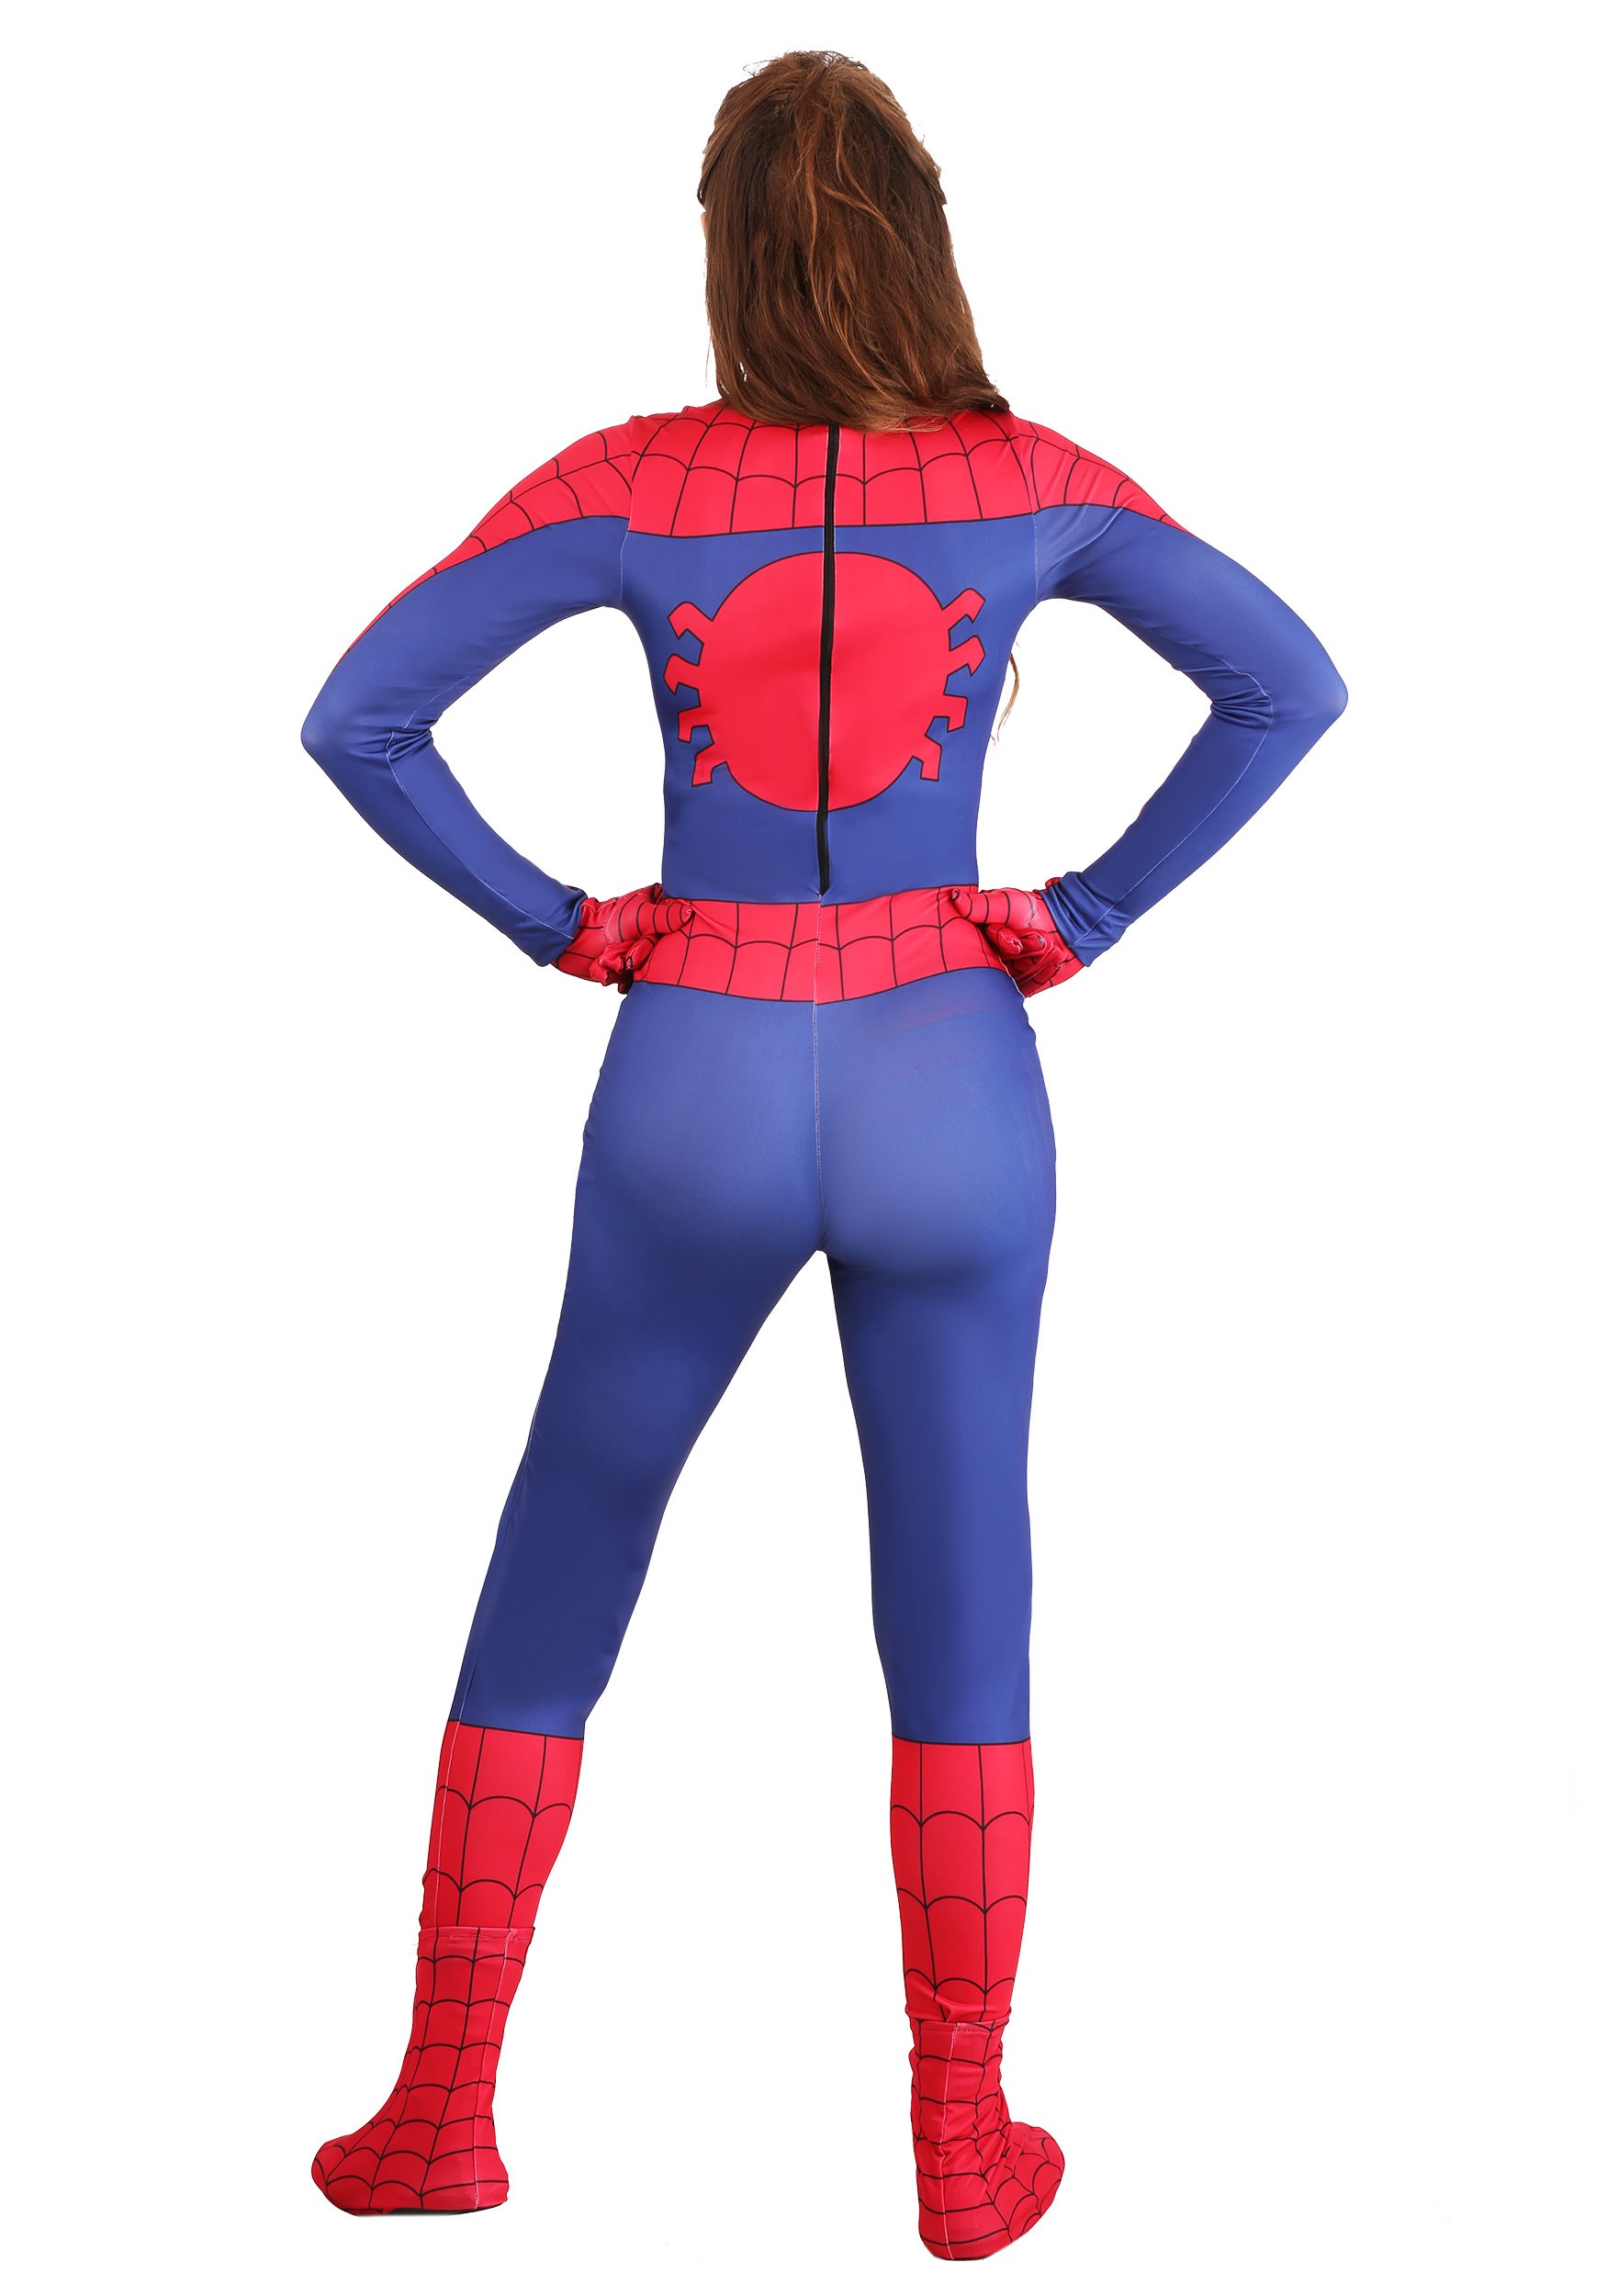 Spider-Man Costume For Women , Adult Superhero Costume